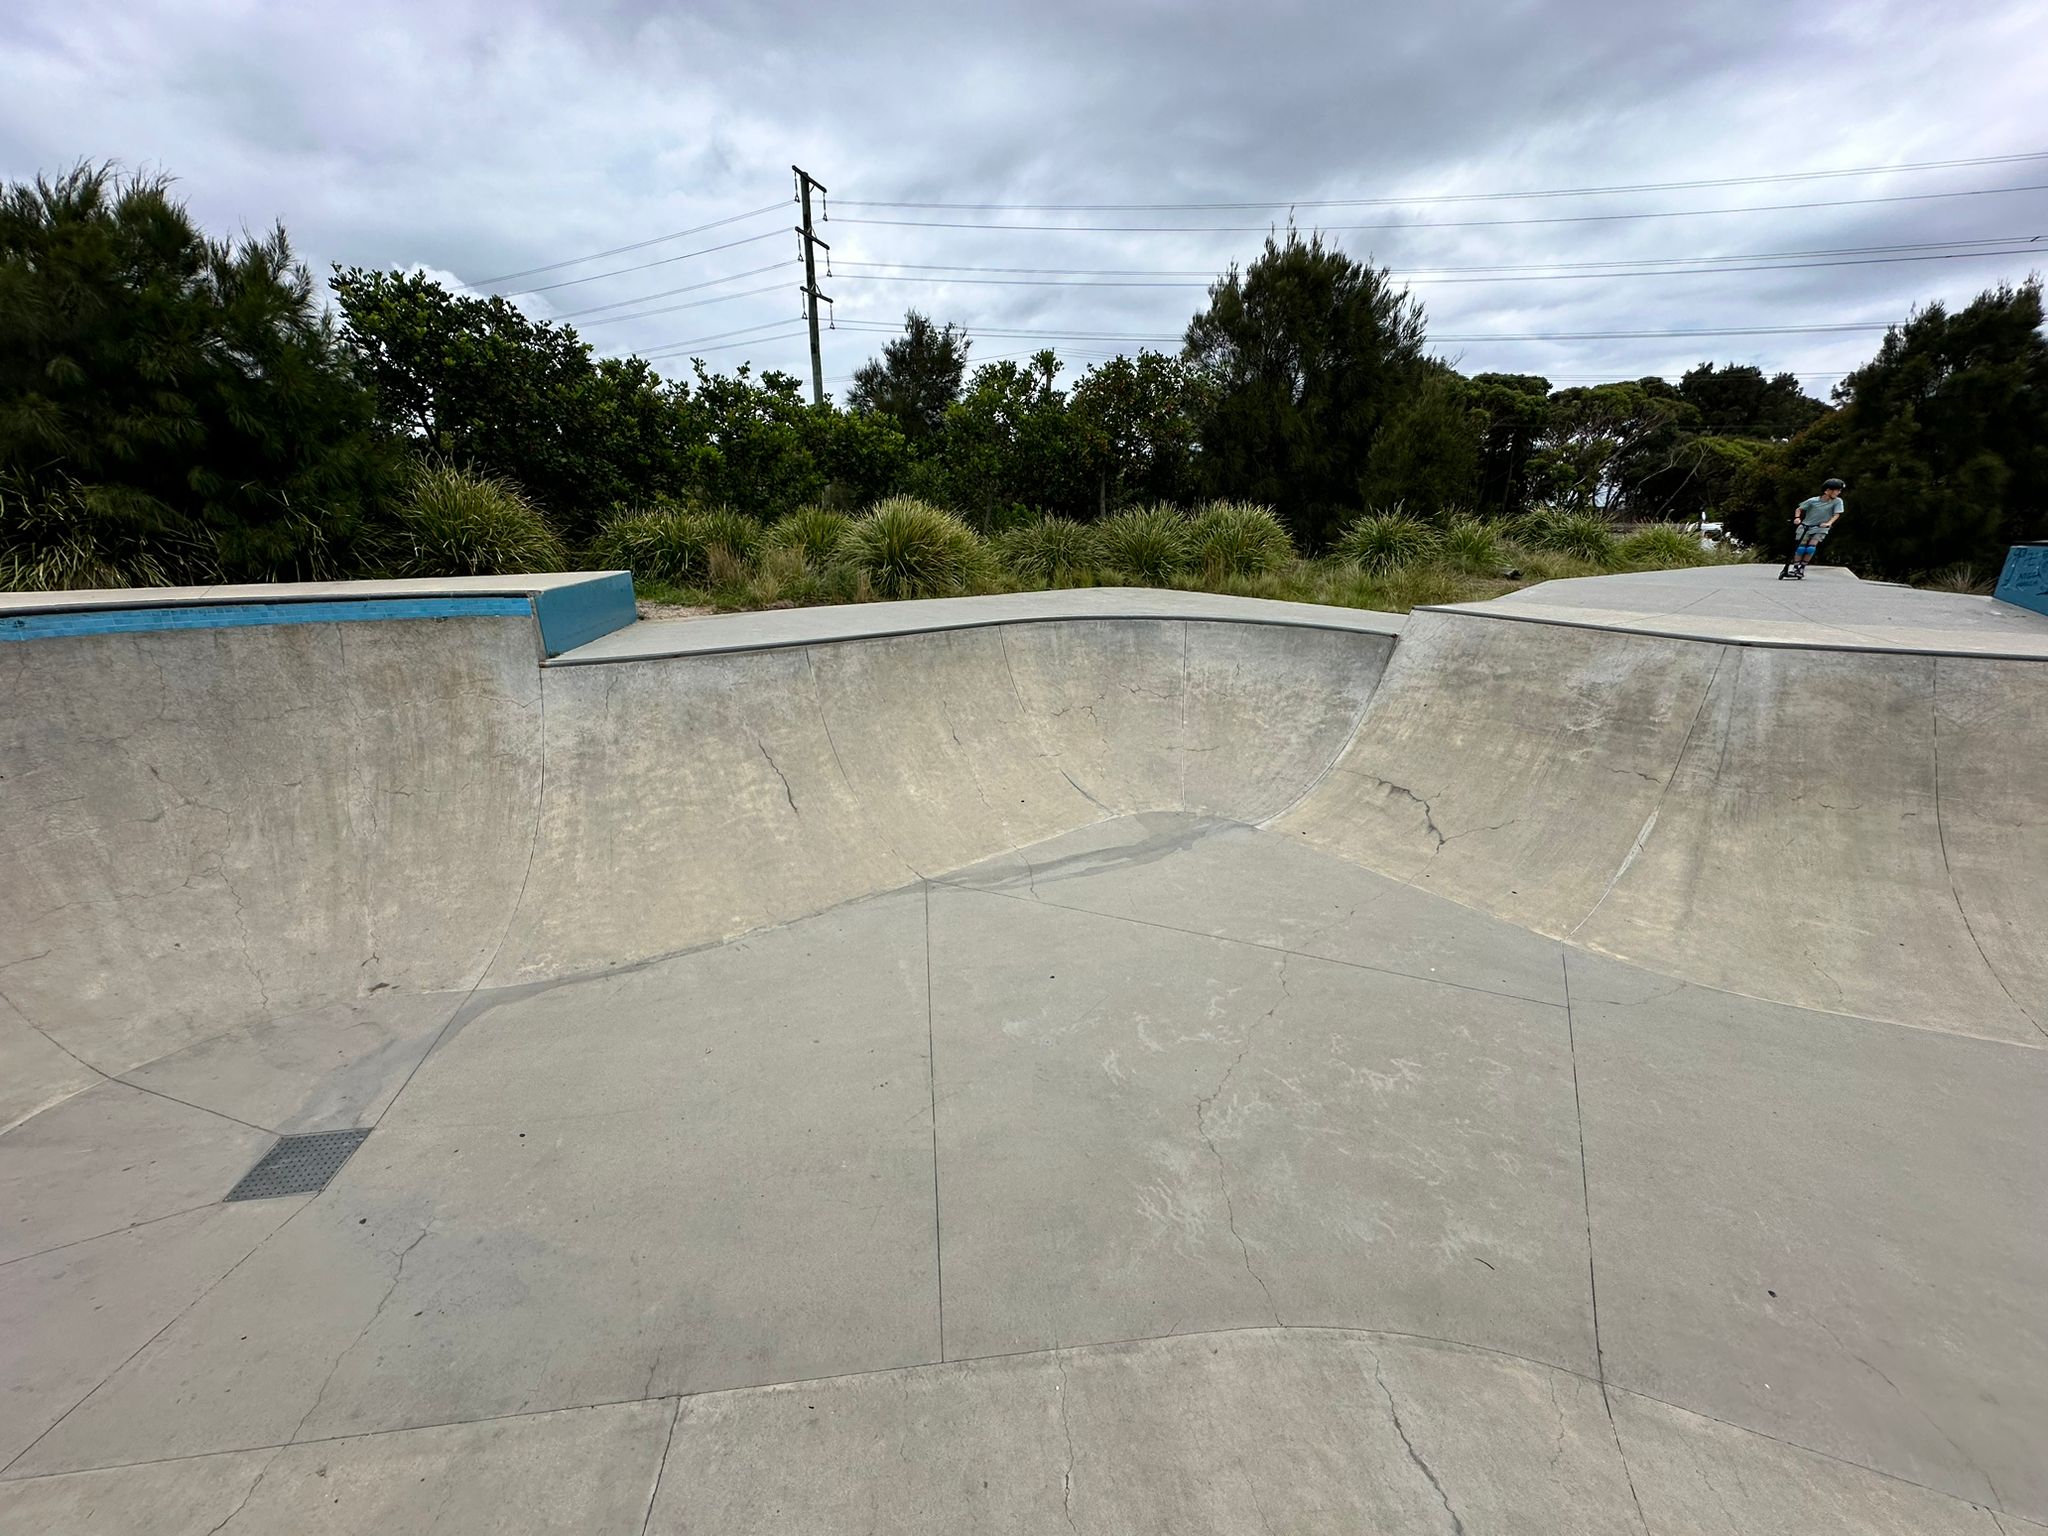 Greenhills skatepark